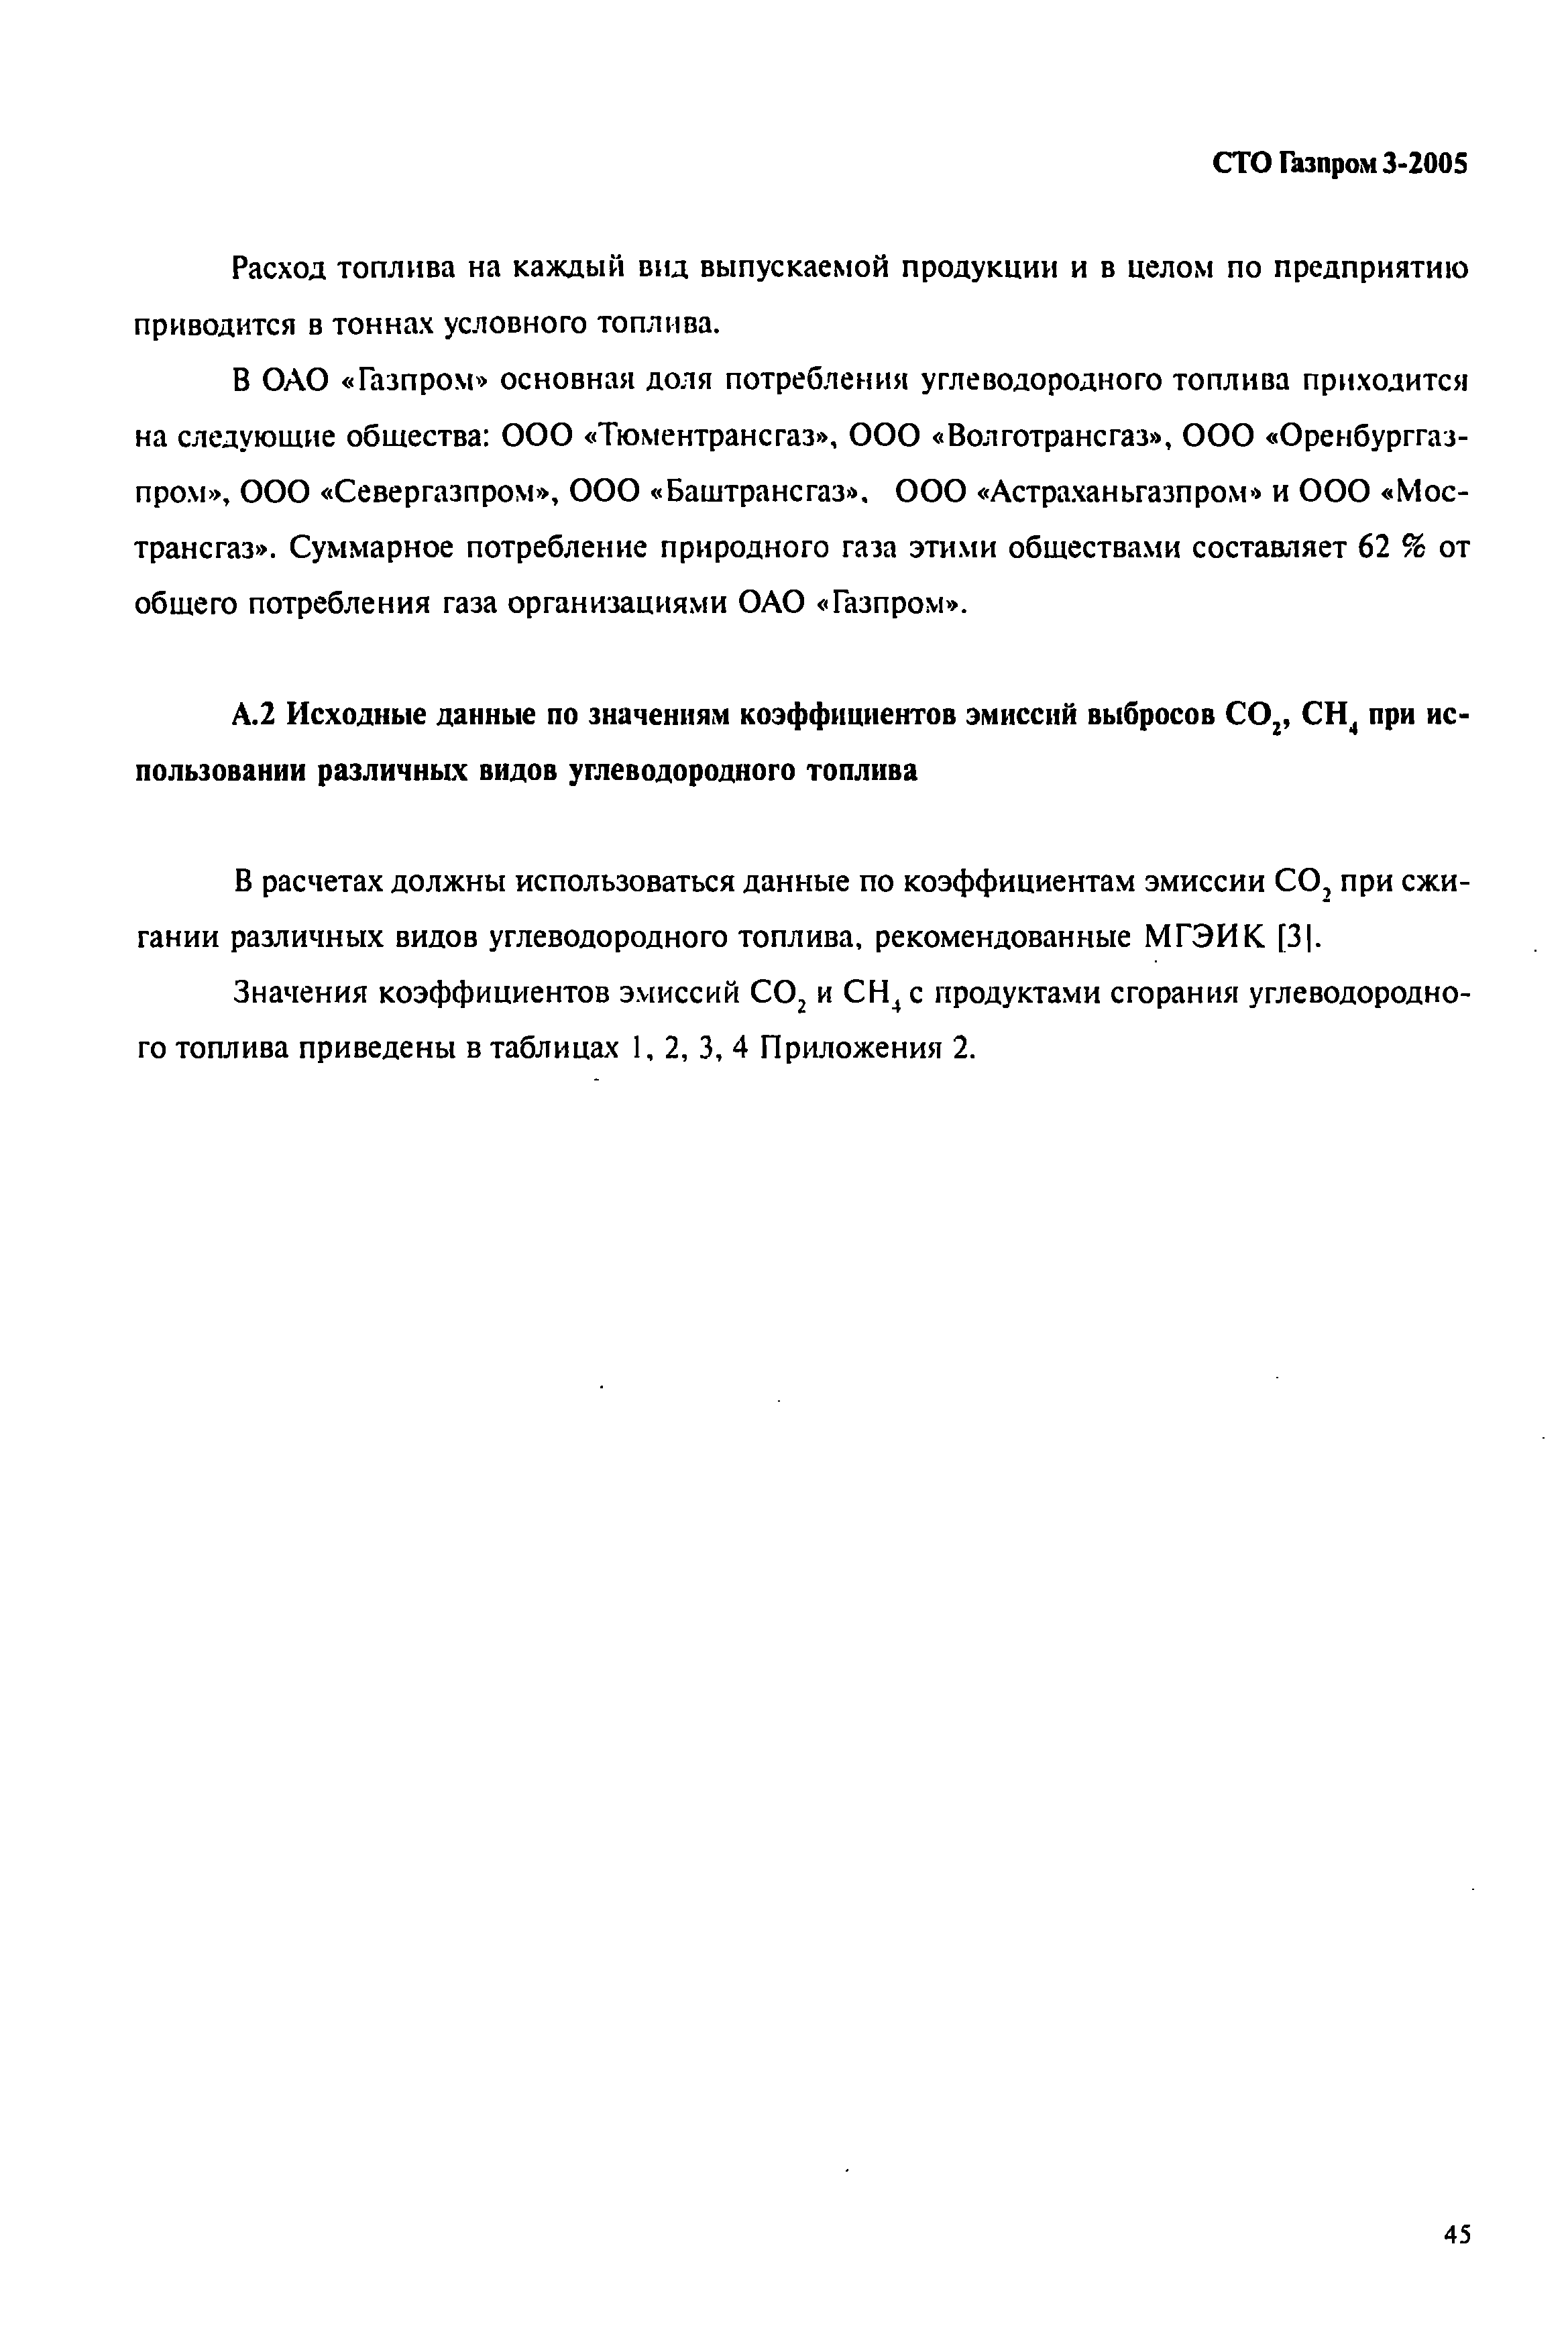 СТО Газпром 3-2005